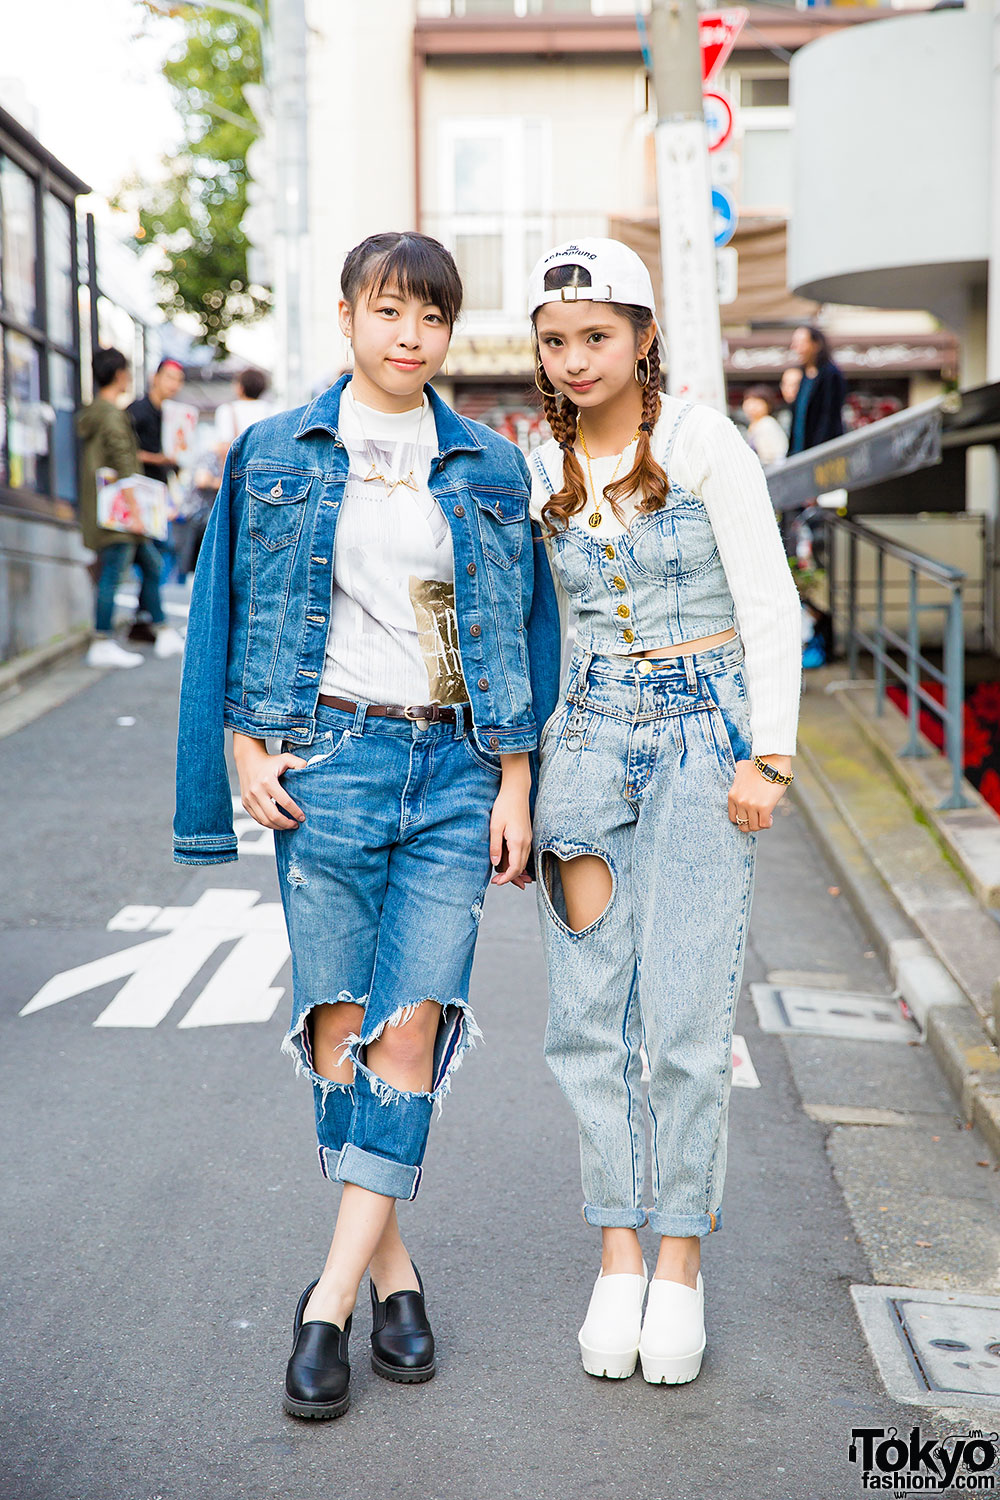 Harajuku Girls W Braided Hair In Denim Outfits W Fig Viper Bershka Chanel Zara Sango Items Tokyo Fashion